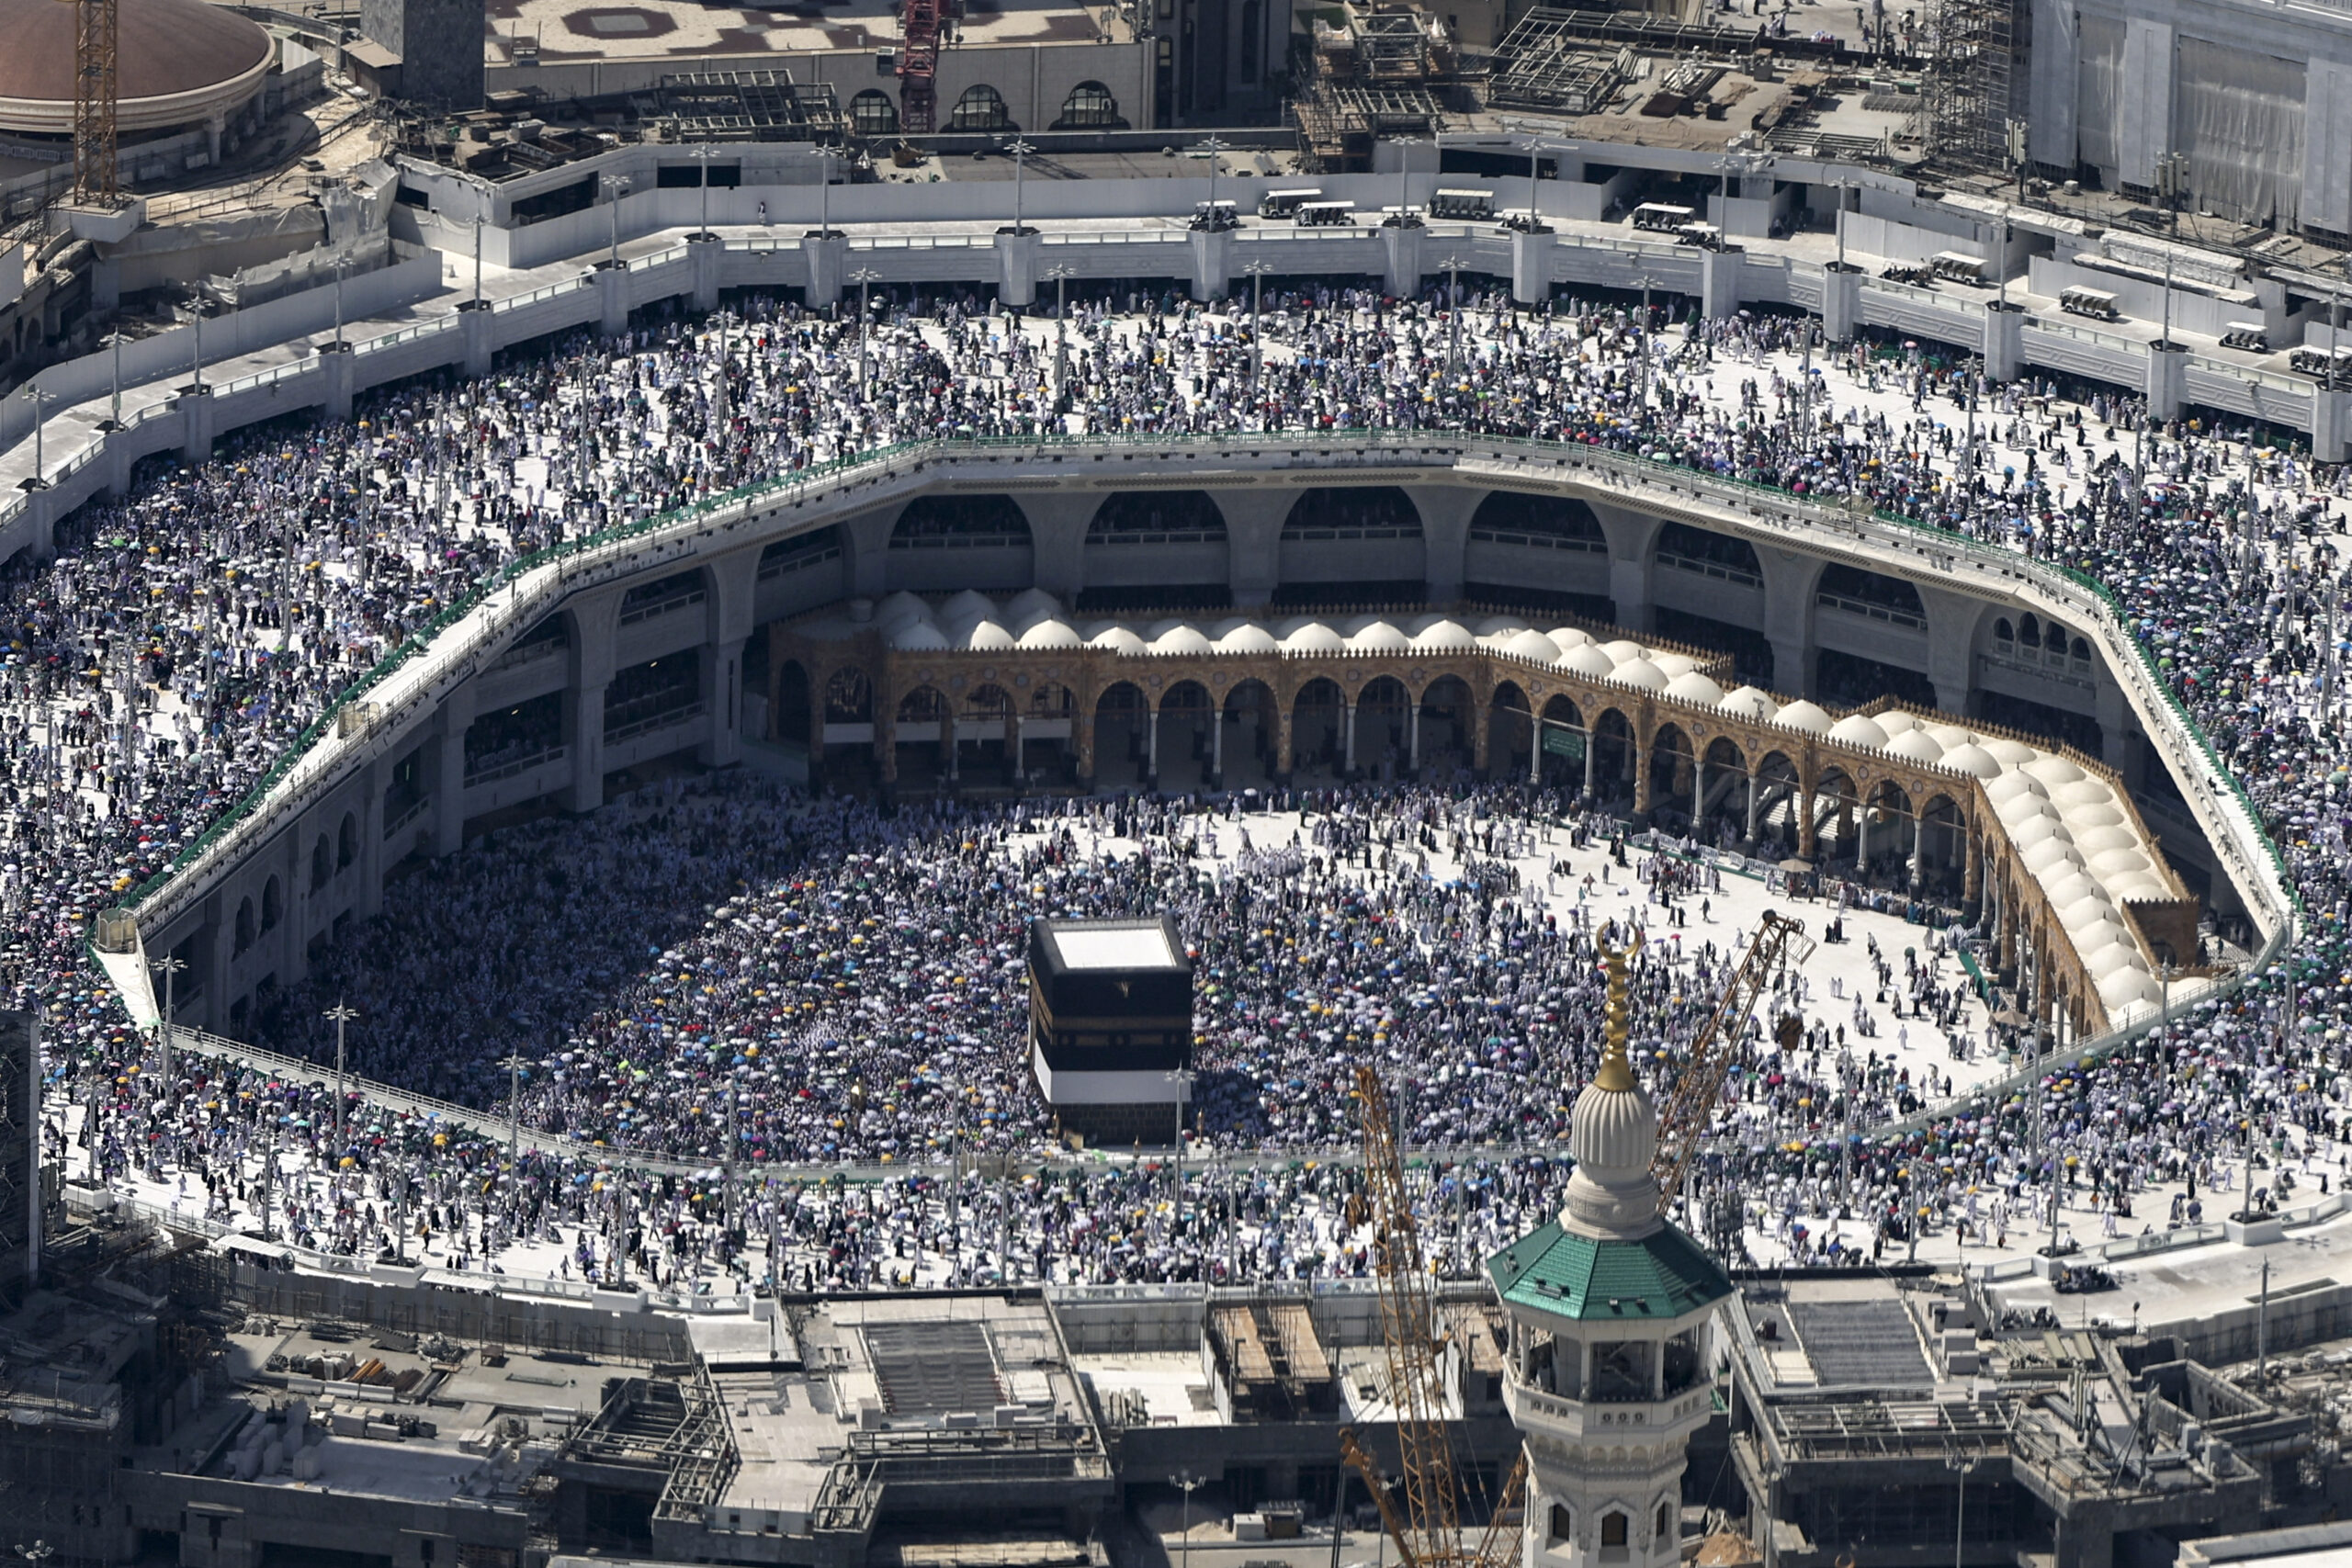 Pinay among 1,000 dead in Hajj pilgrimage